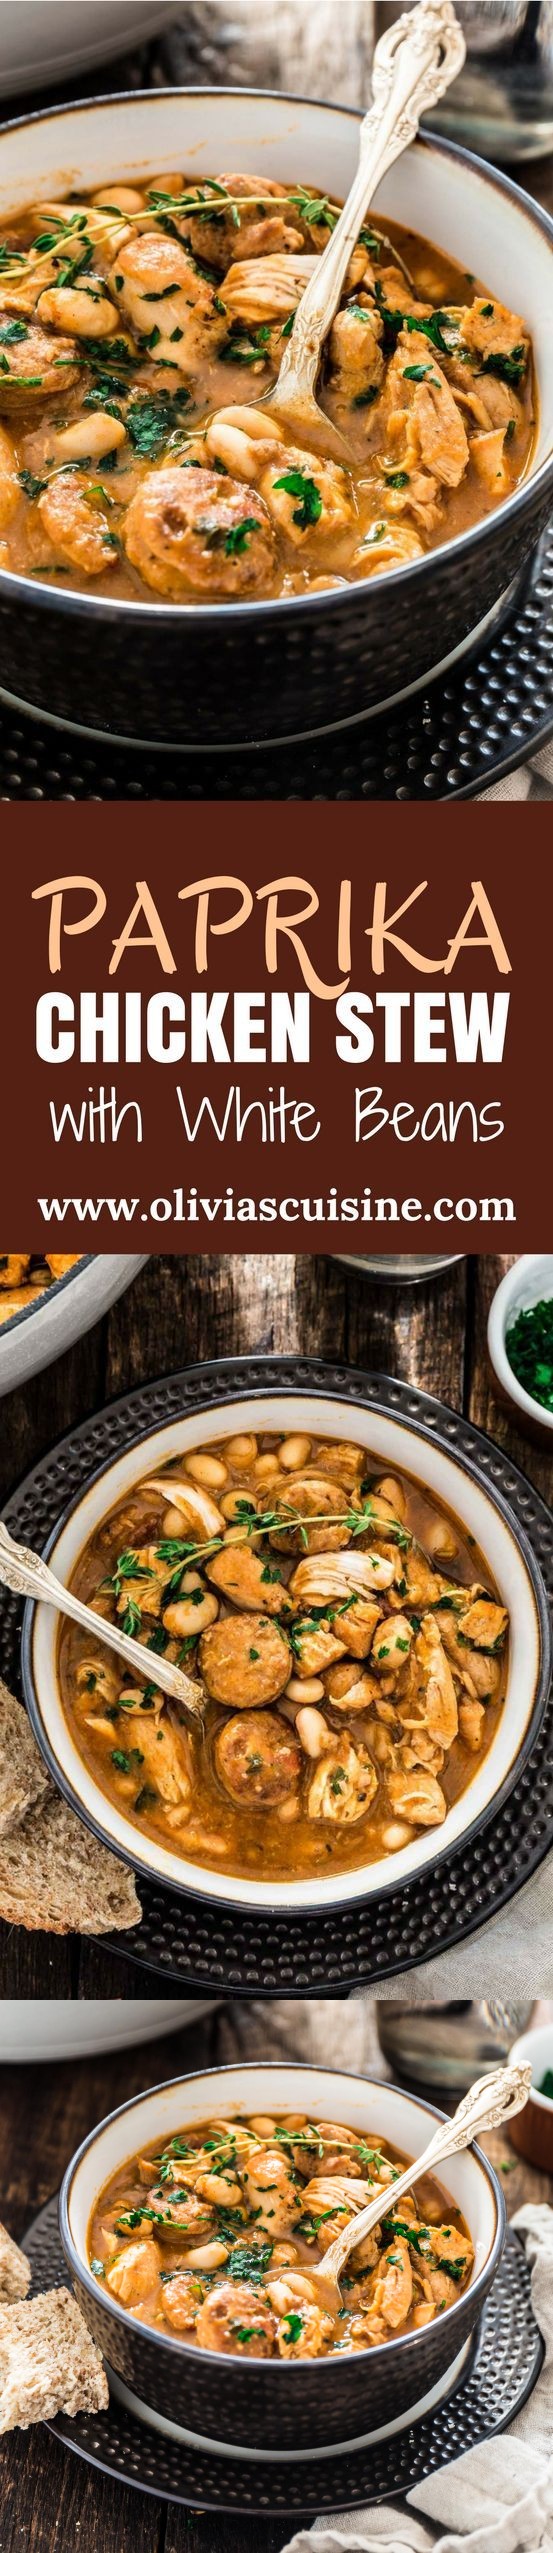 Brazilian Paprika Chicken Stew with White Beans